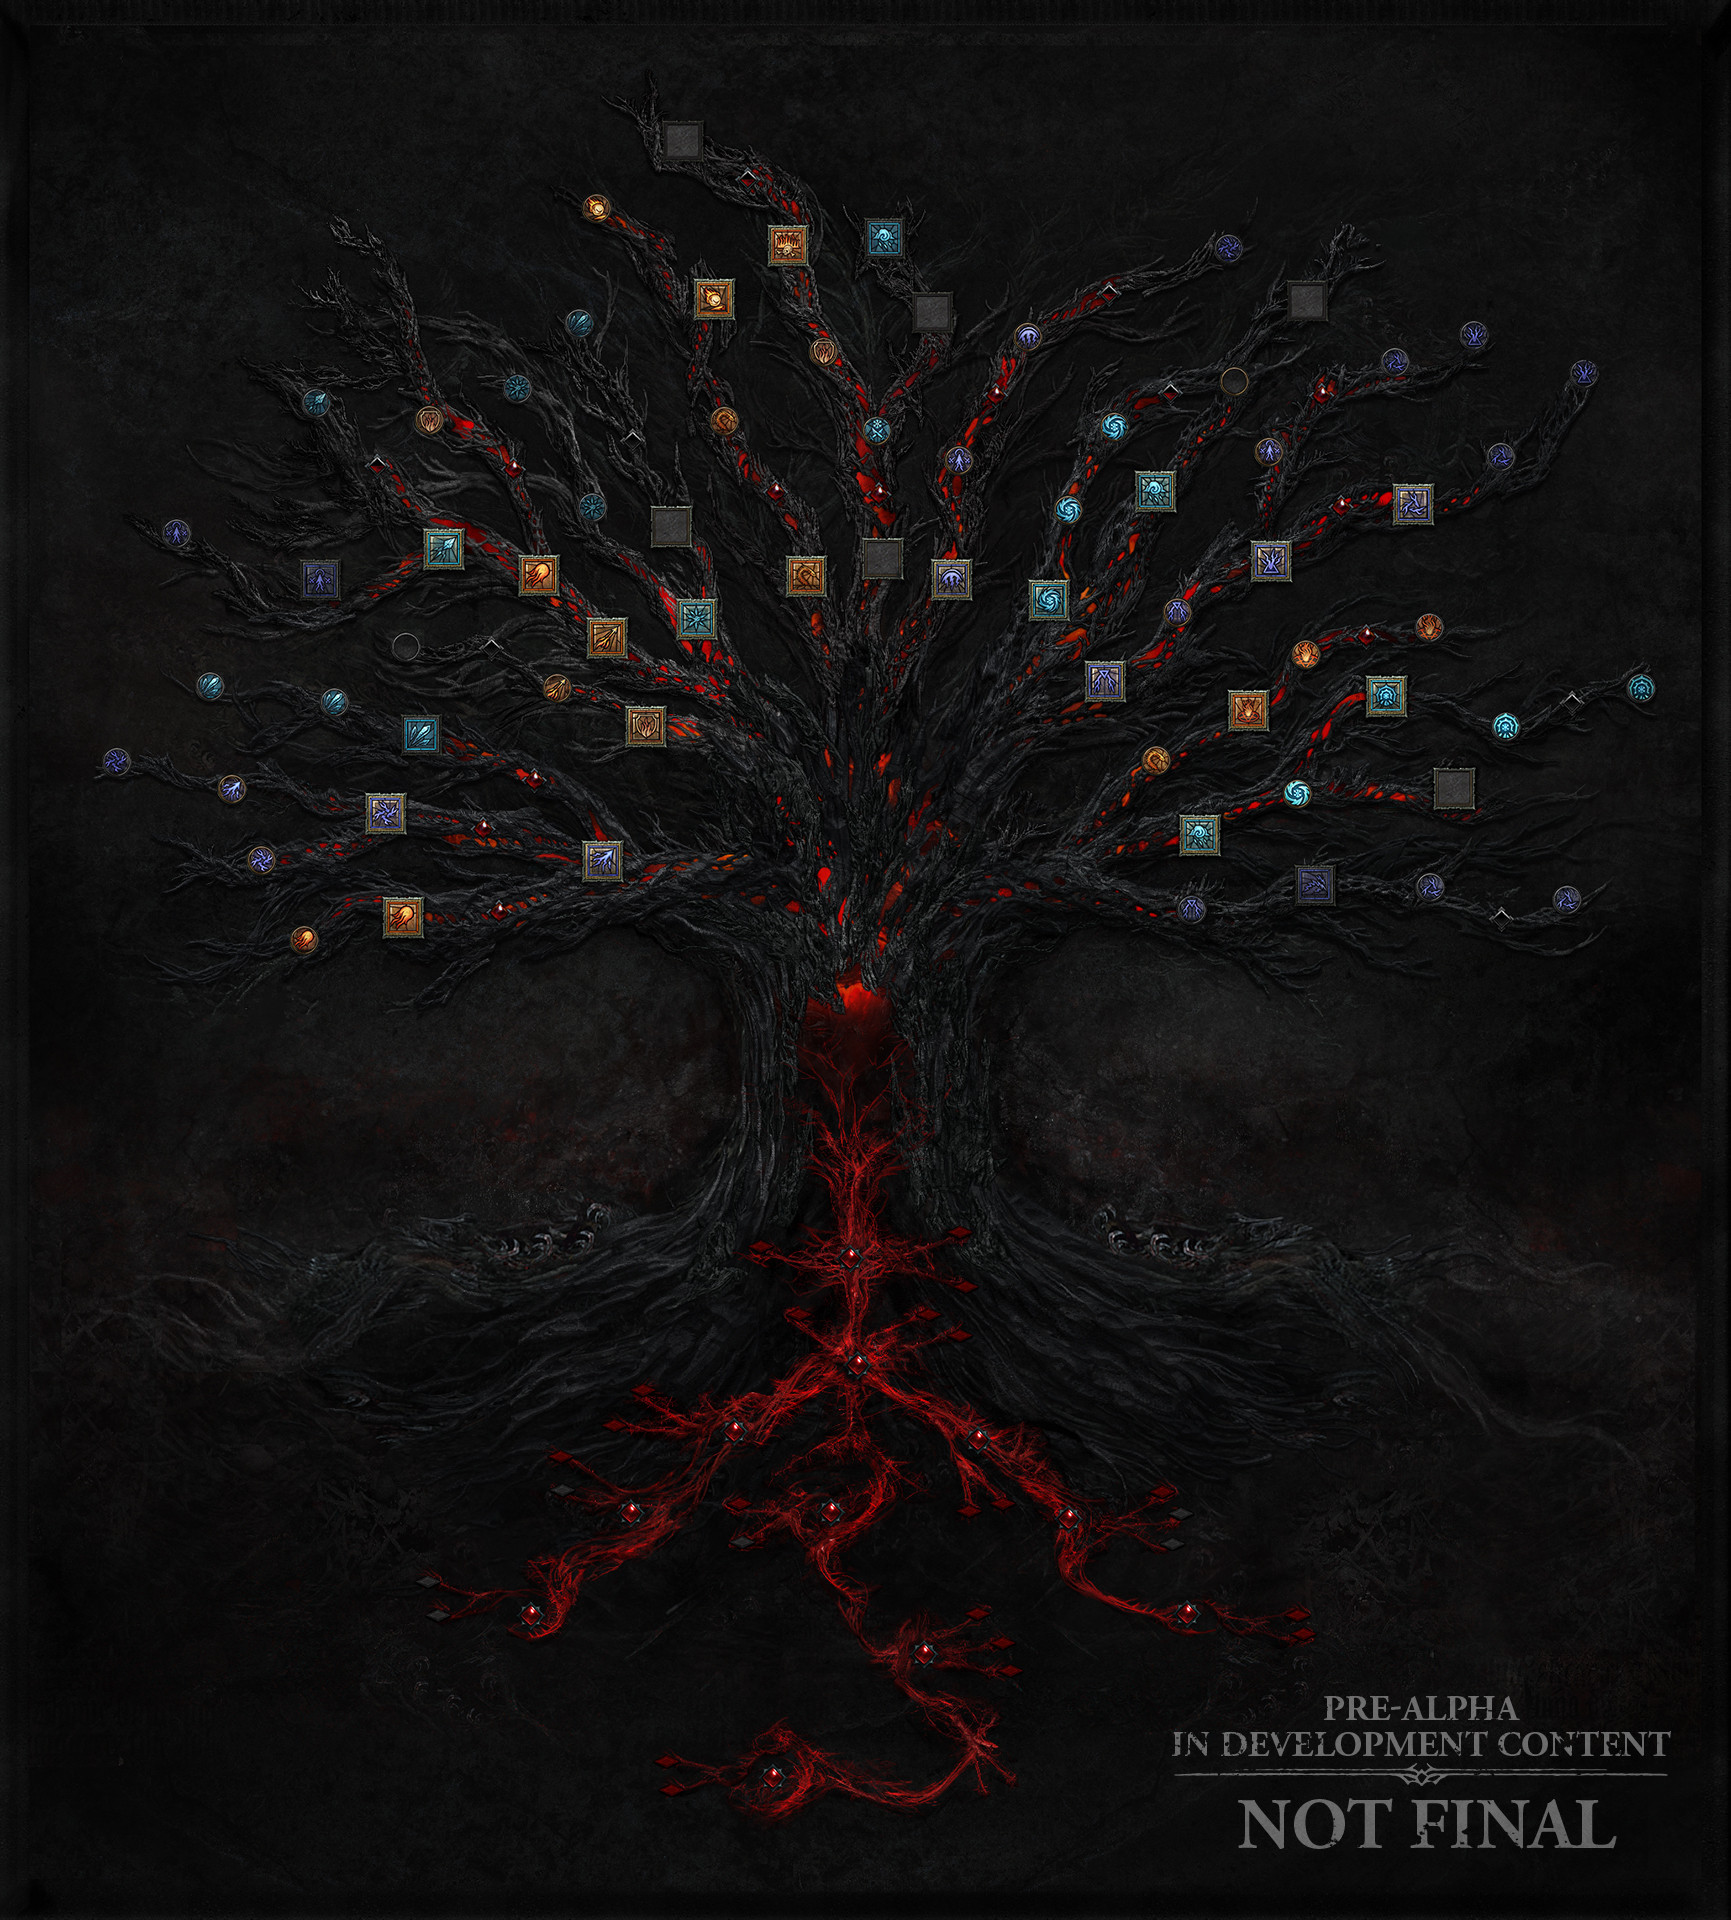 Diablo IV - Новое древо умений и балансировка легендарок